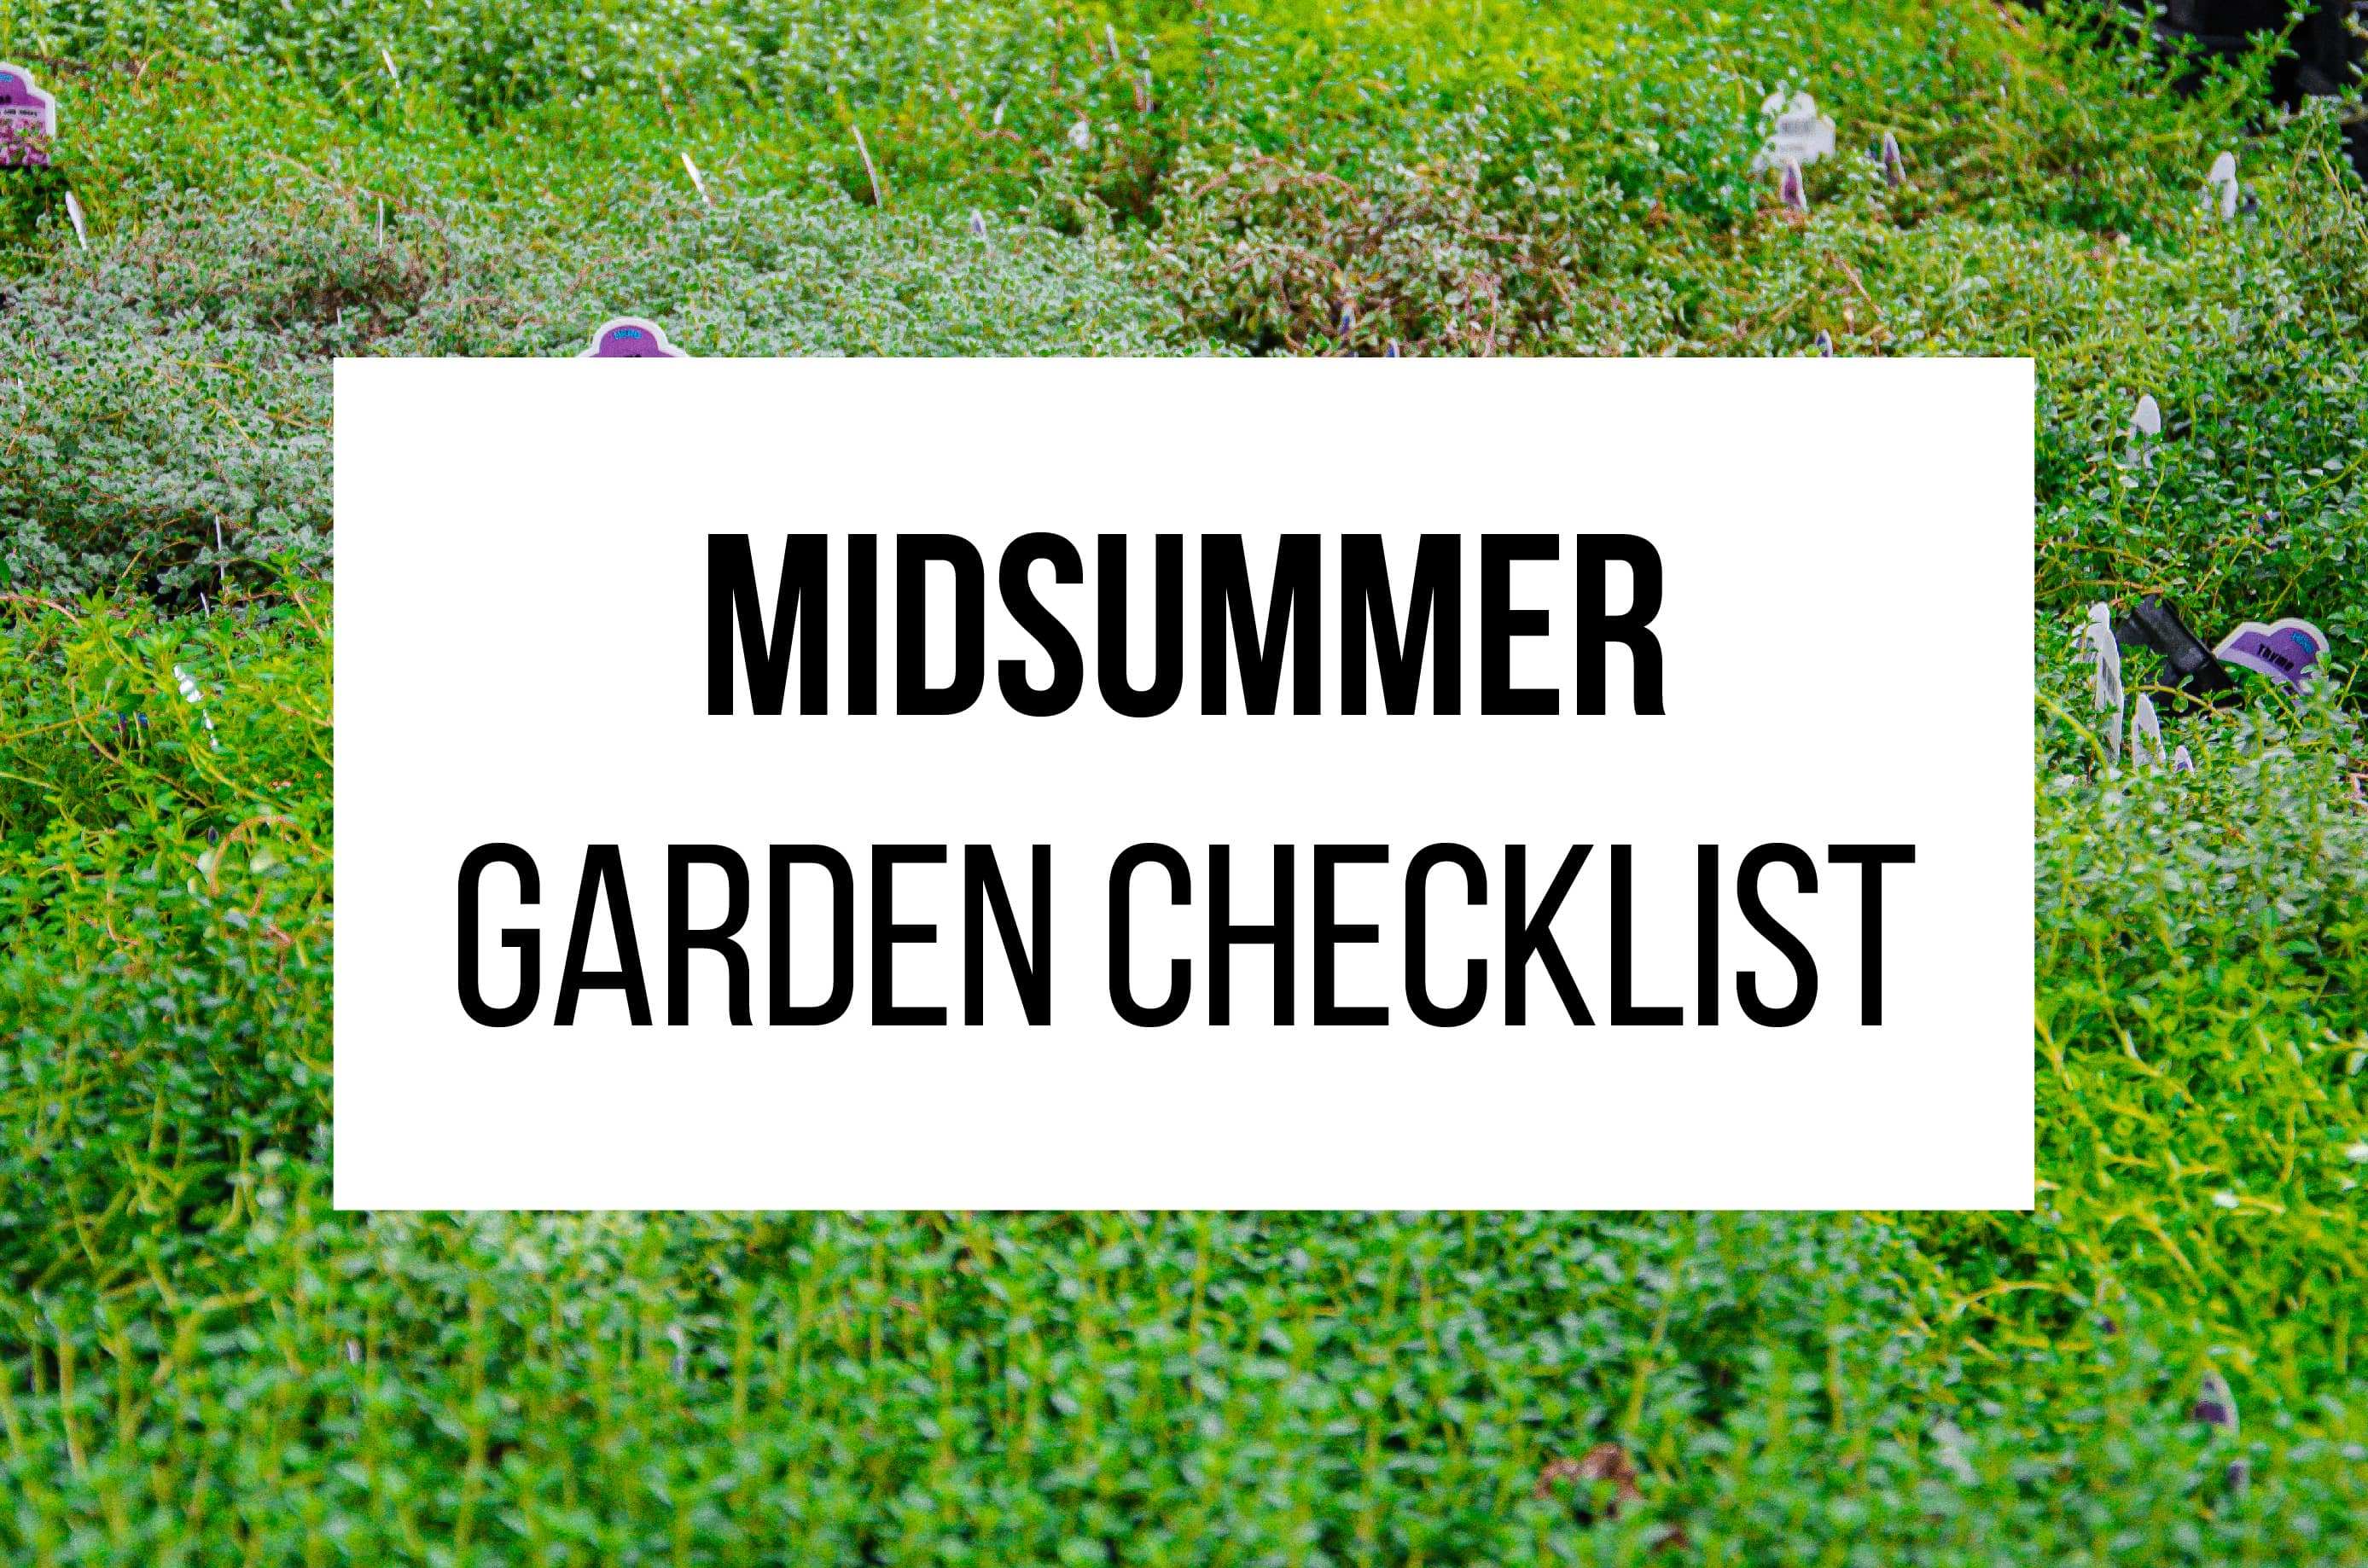 Midsummer garden checklist